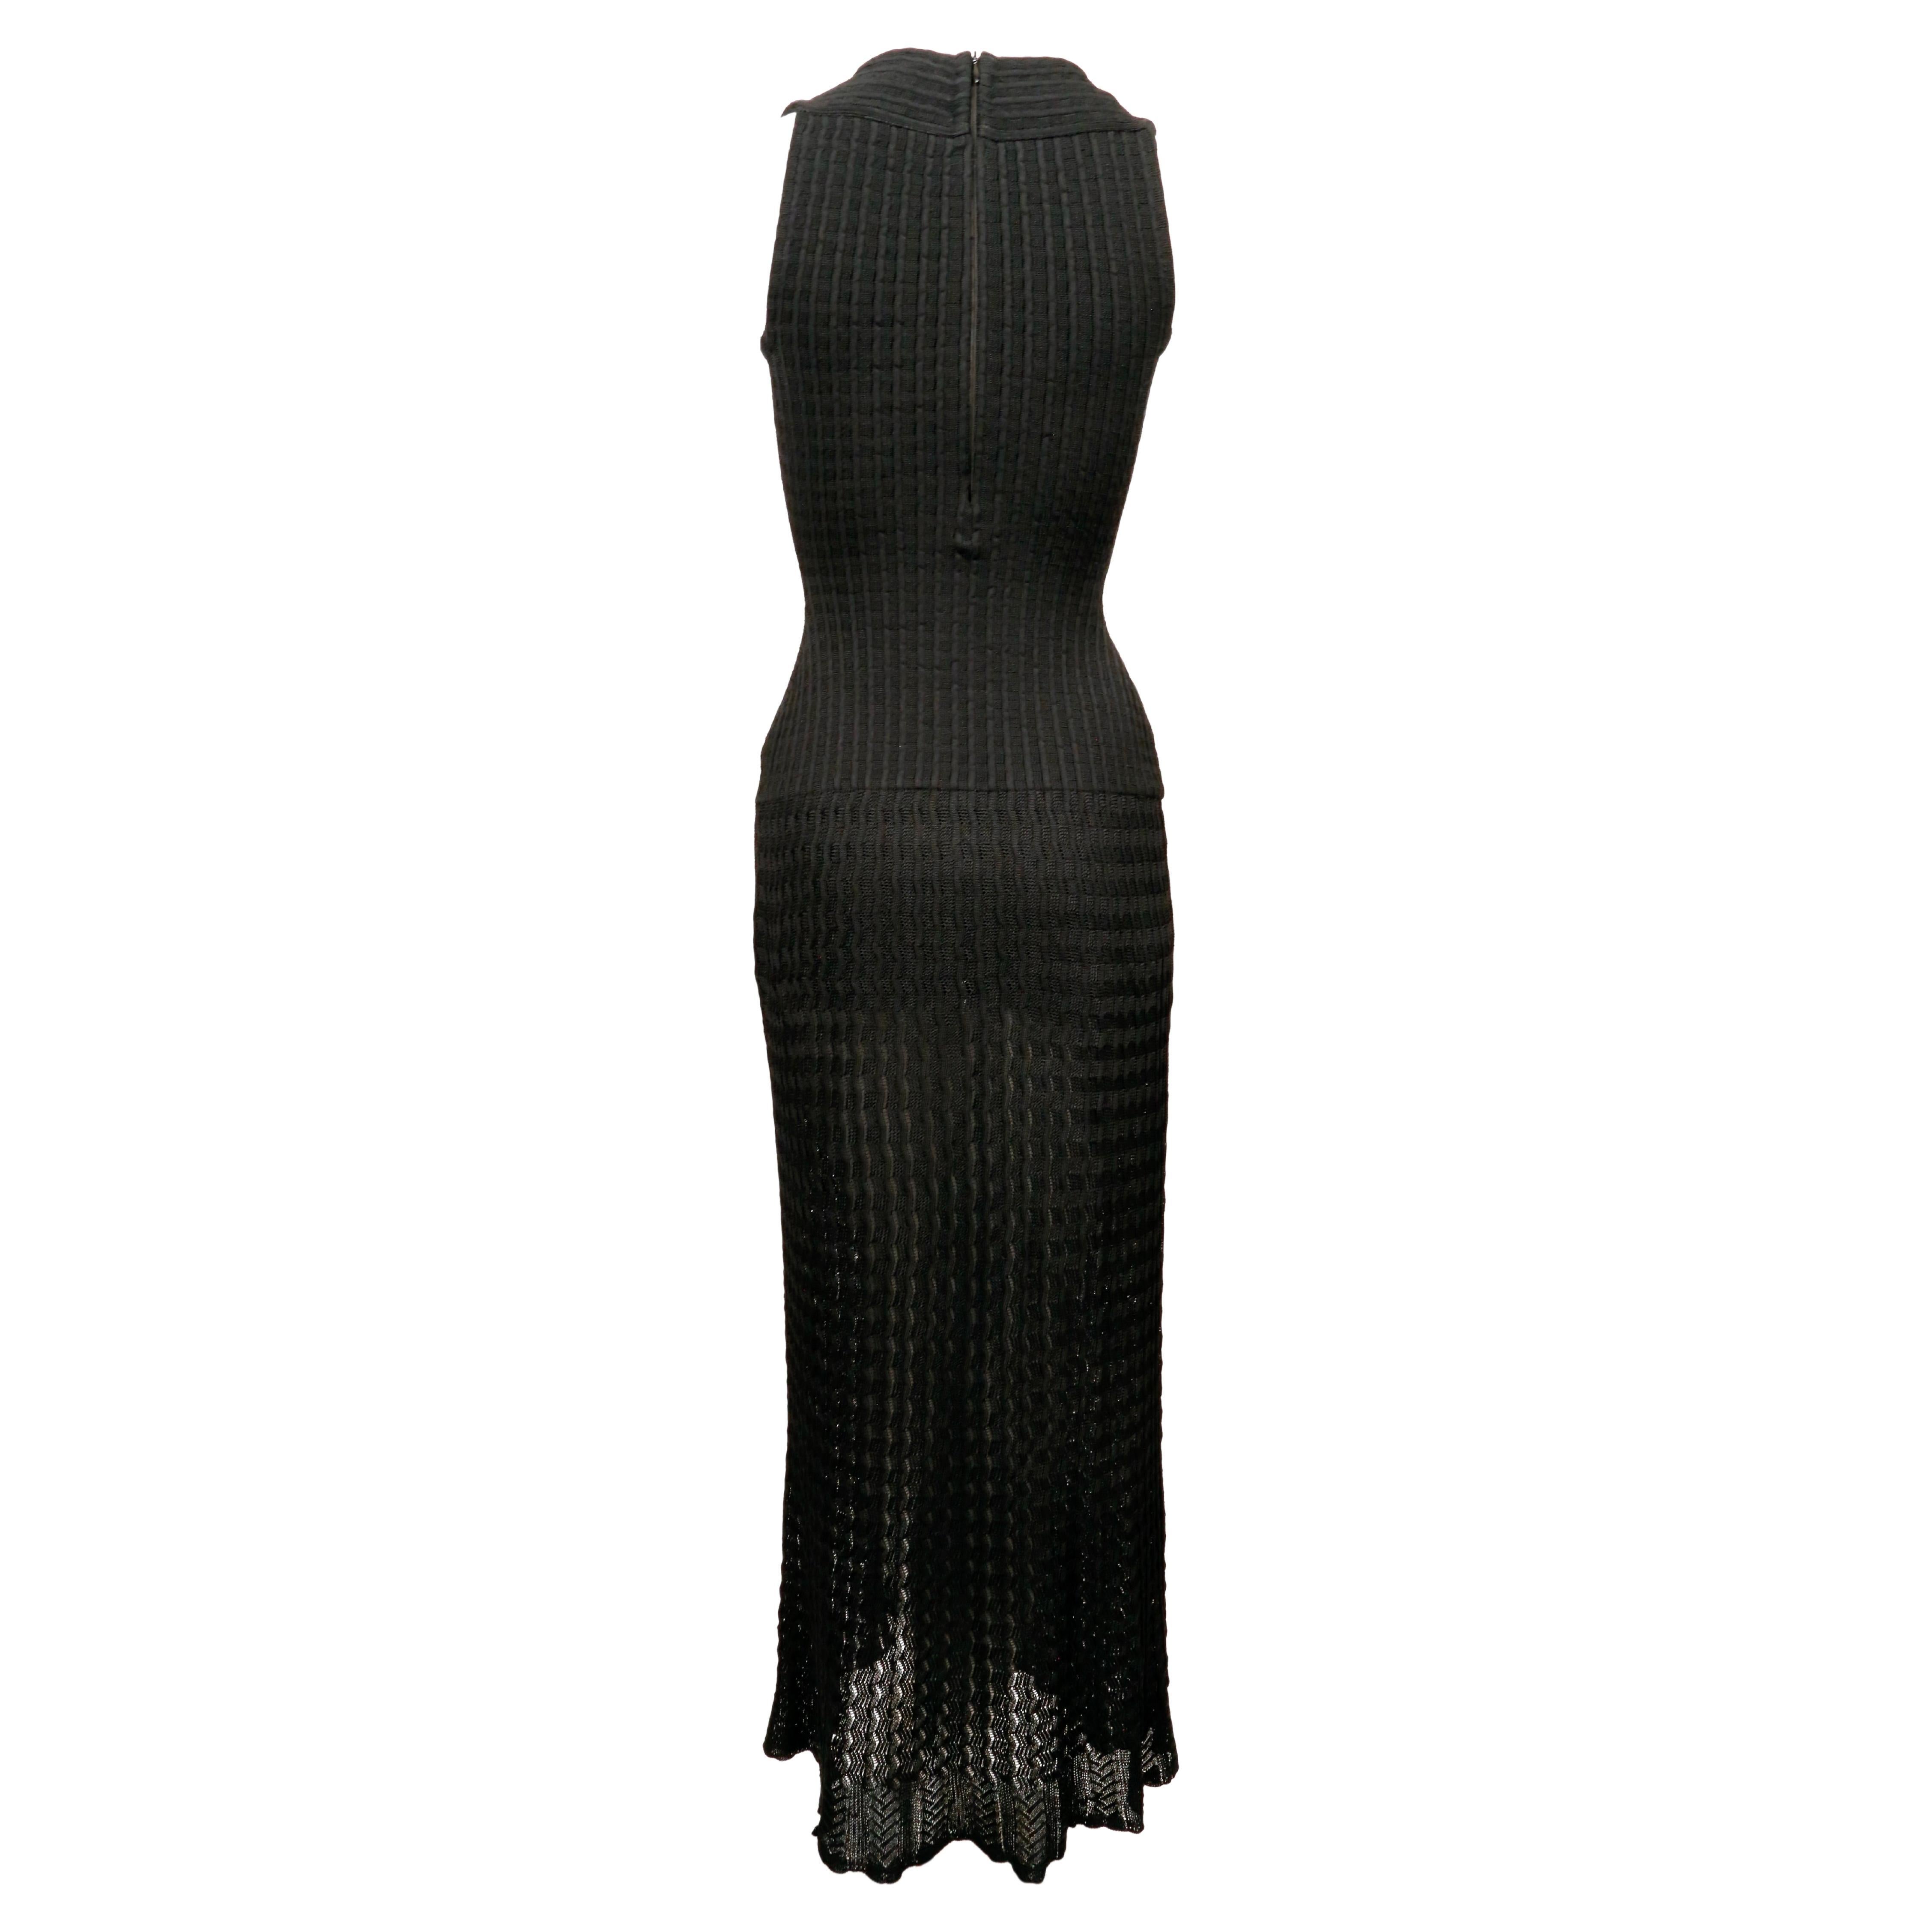 1992 AZZEDINE ALAIA black open knit long sleeveless dress 1